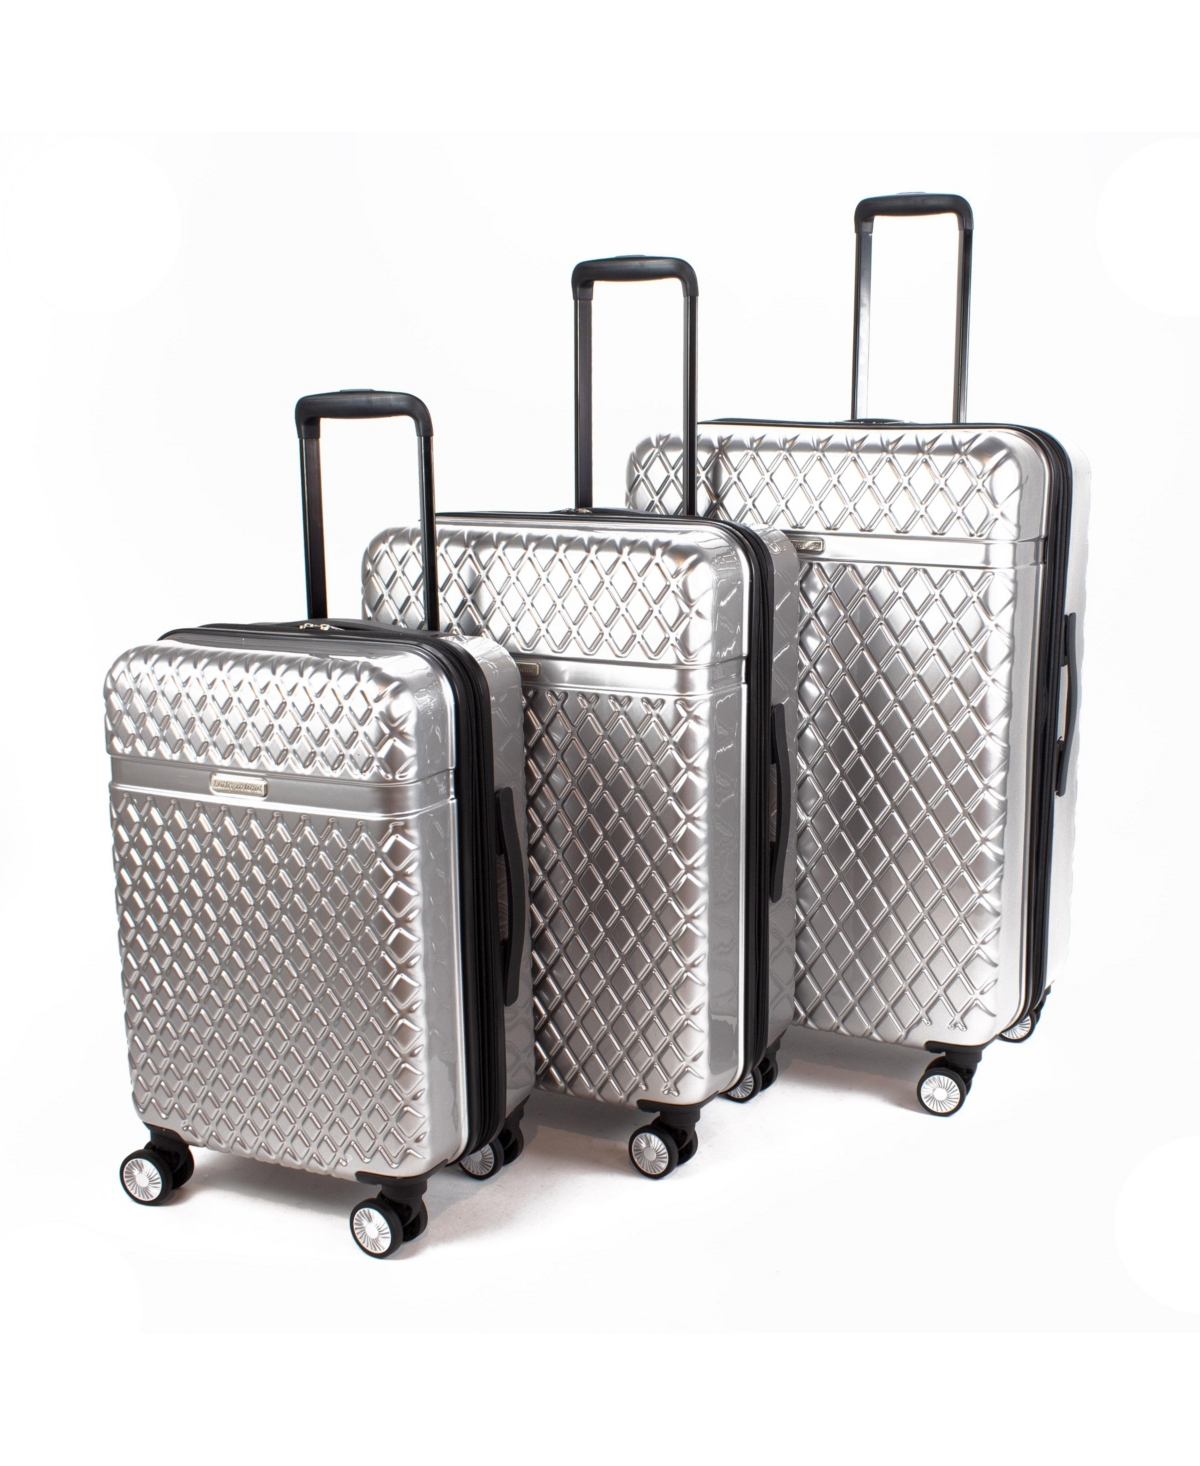 Kathy Ireland Yasmine 3-piece Hardside Luggage Set In Silver